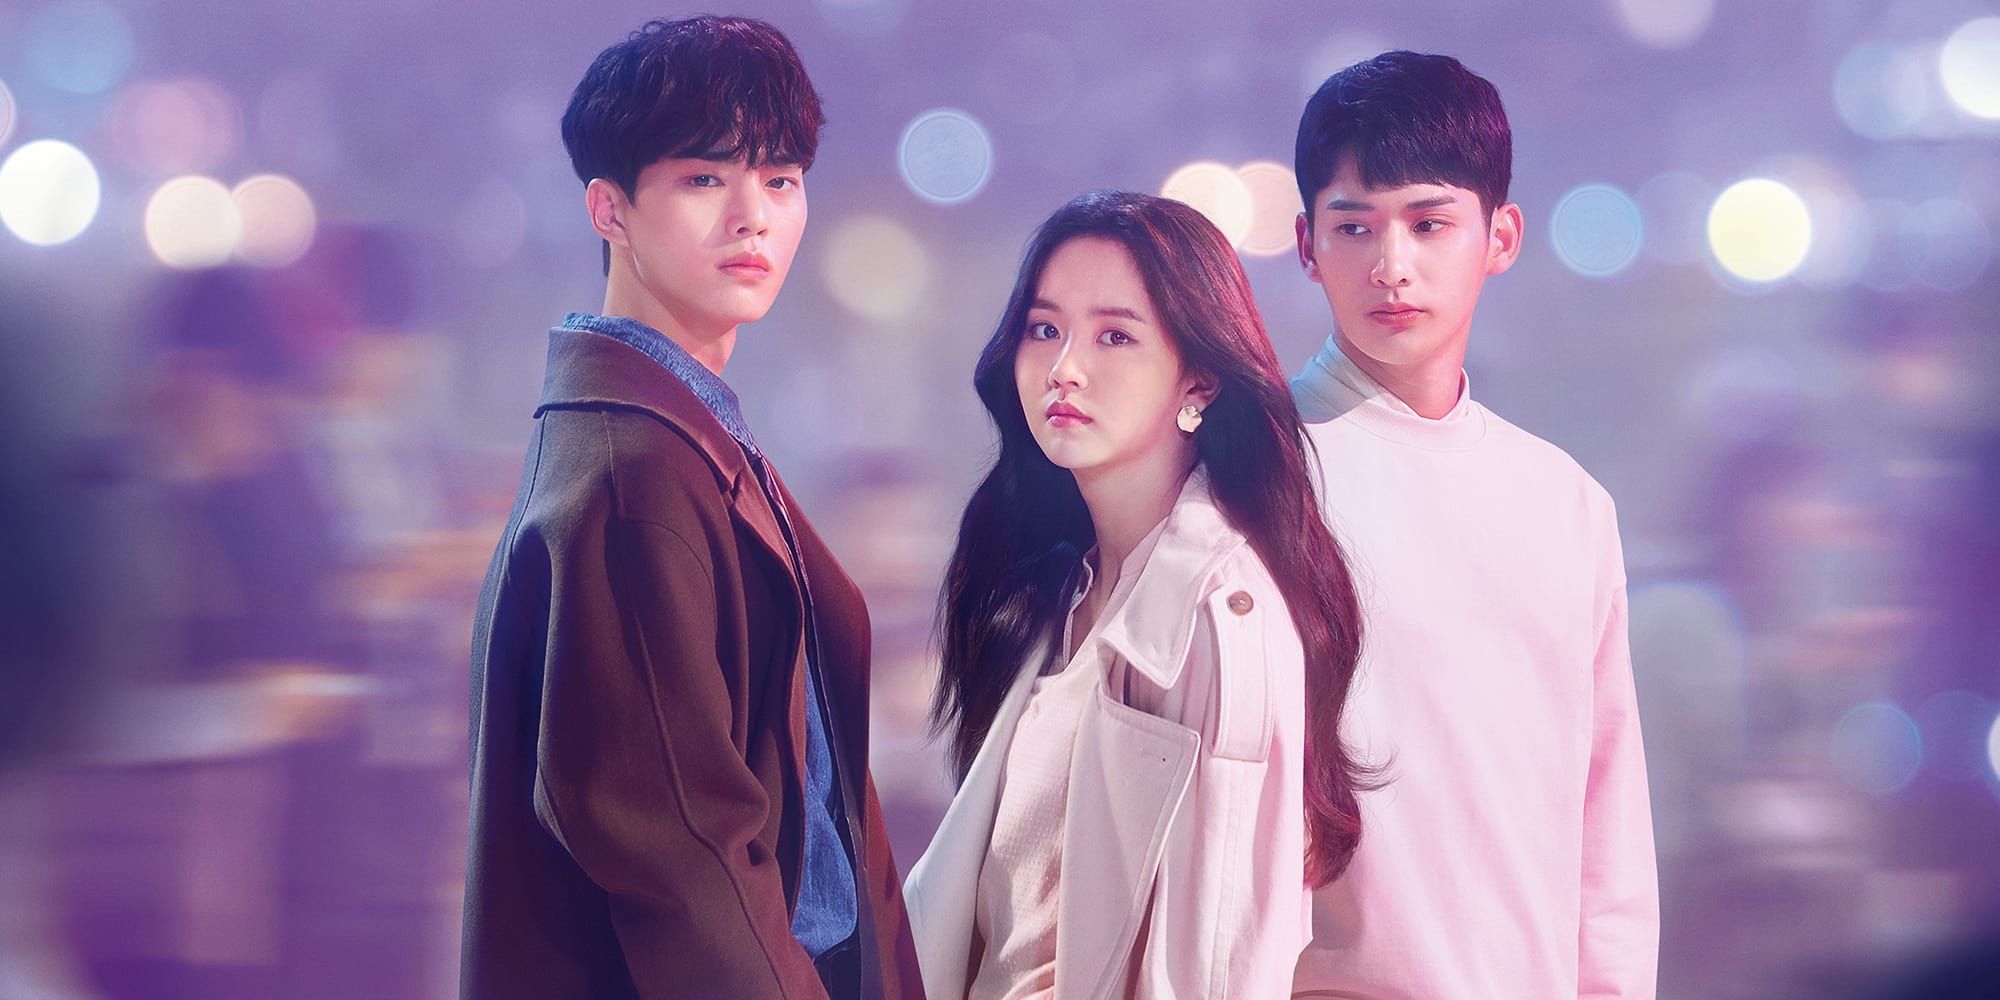 Song Kang, Kim So-hyun and Jung Ga-ram in Love Alarm season 1 on Netflix